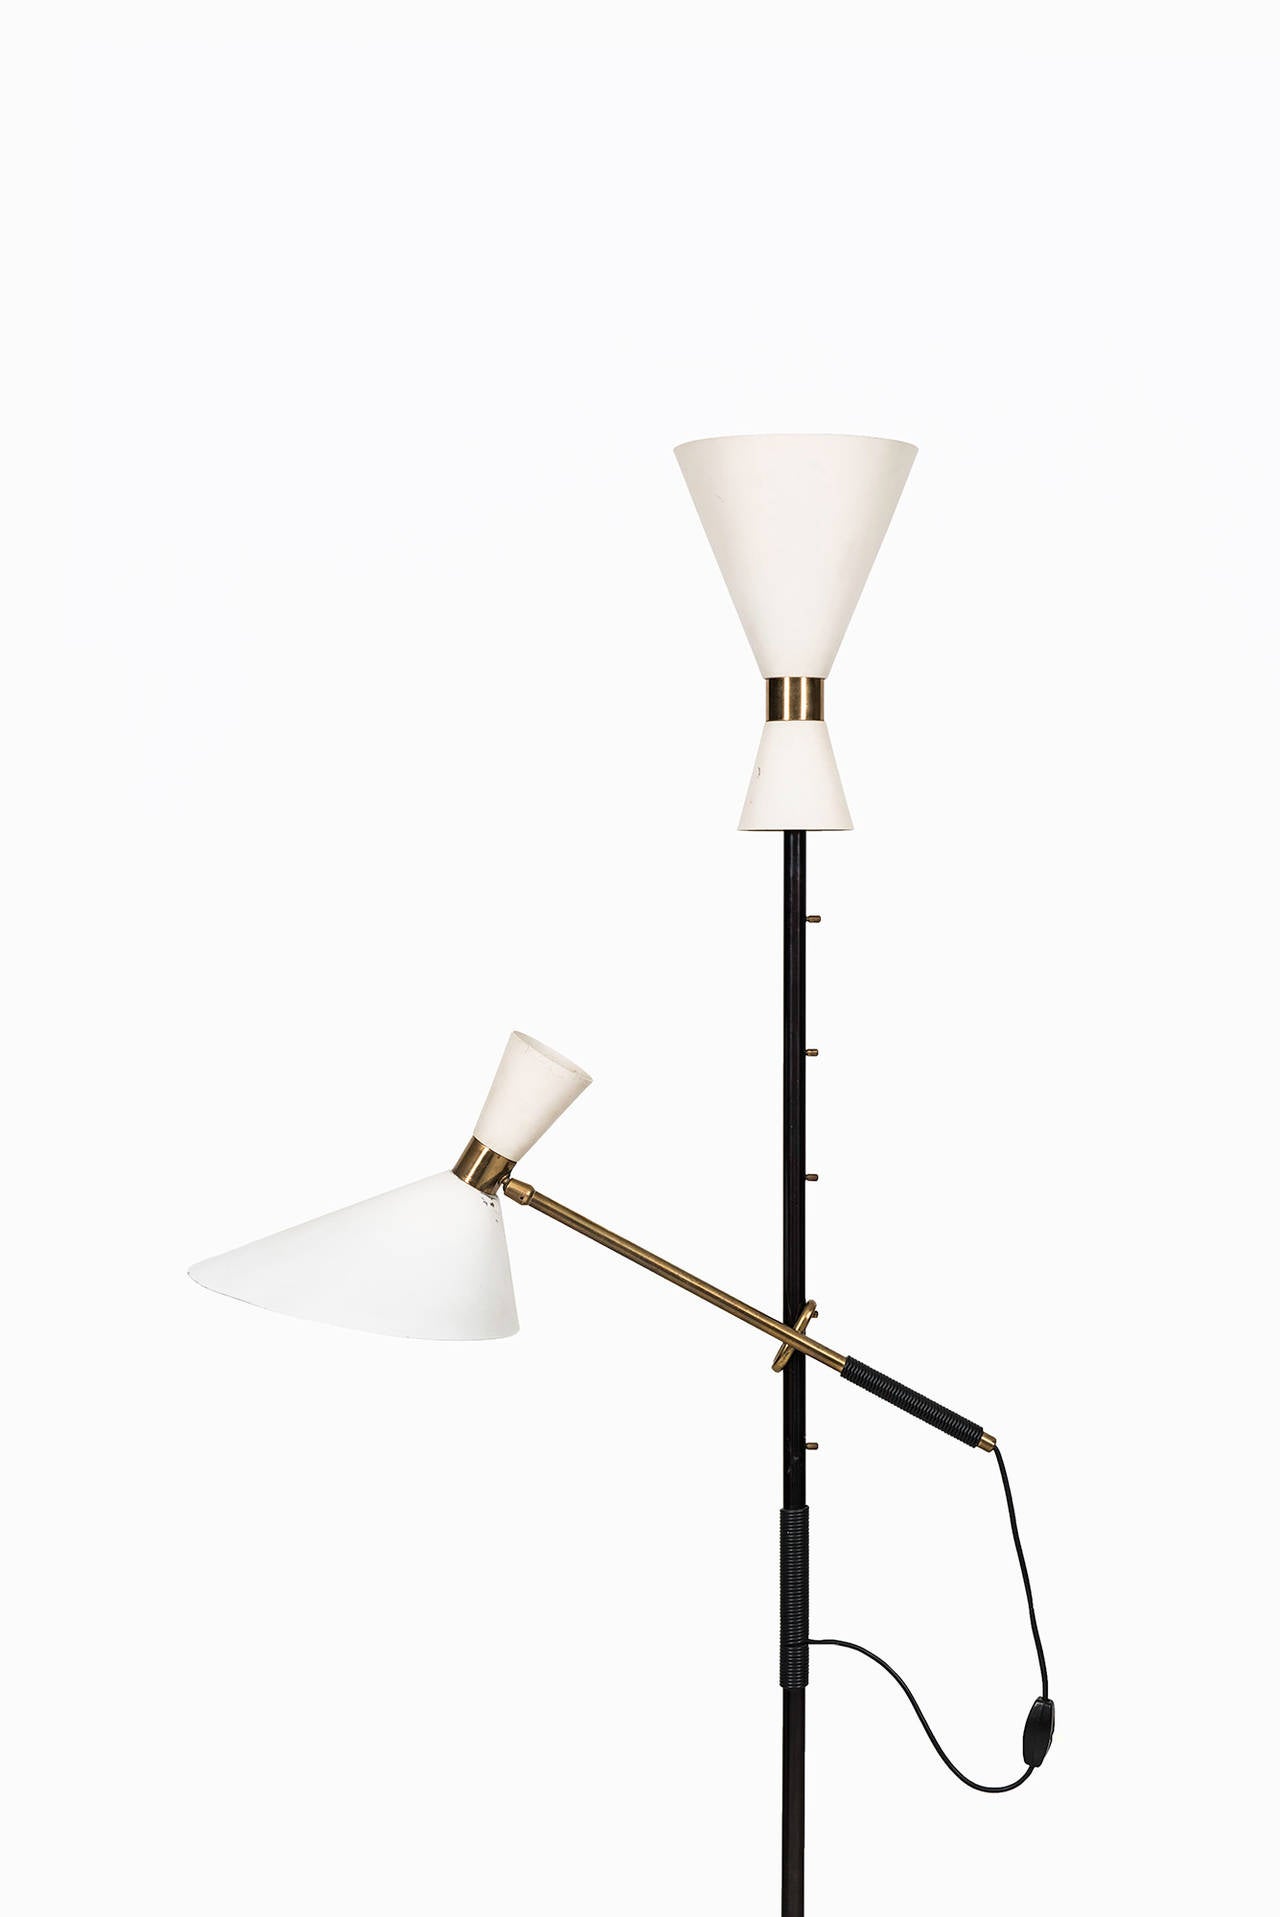 Rare floor lamp model Pelikan designed and produced by J.T Kalmar in Austria.